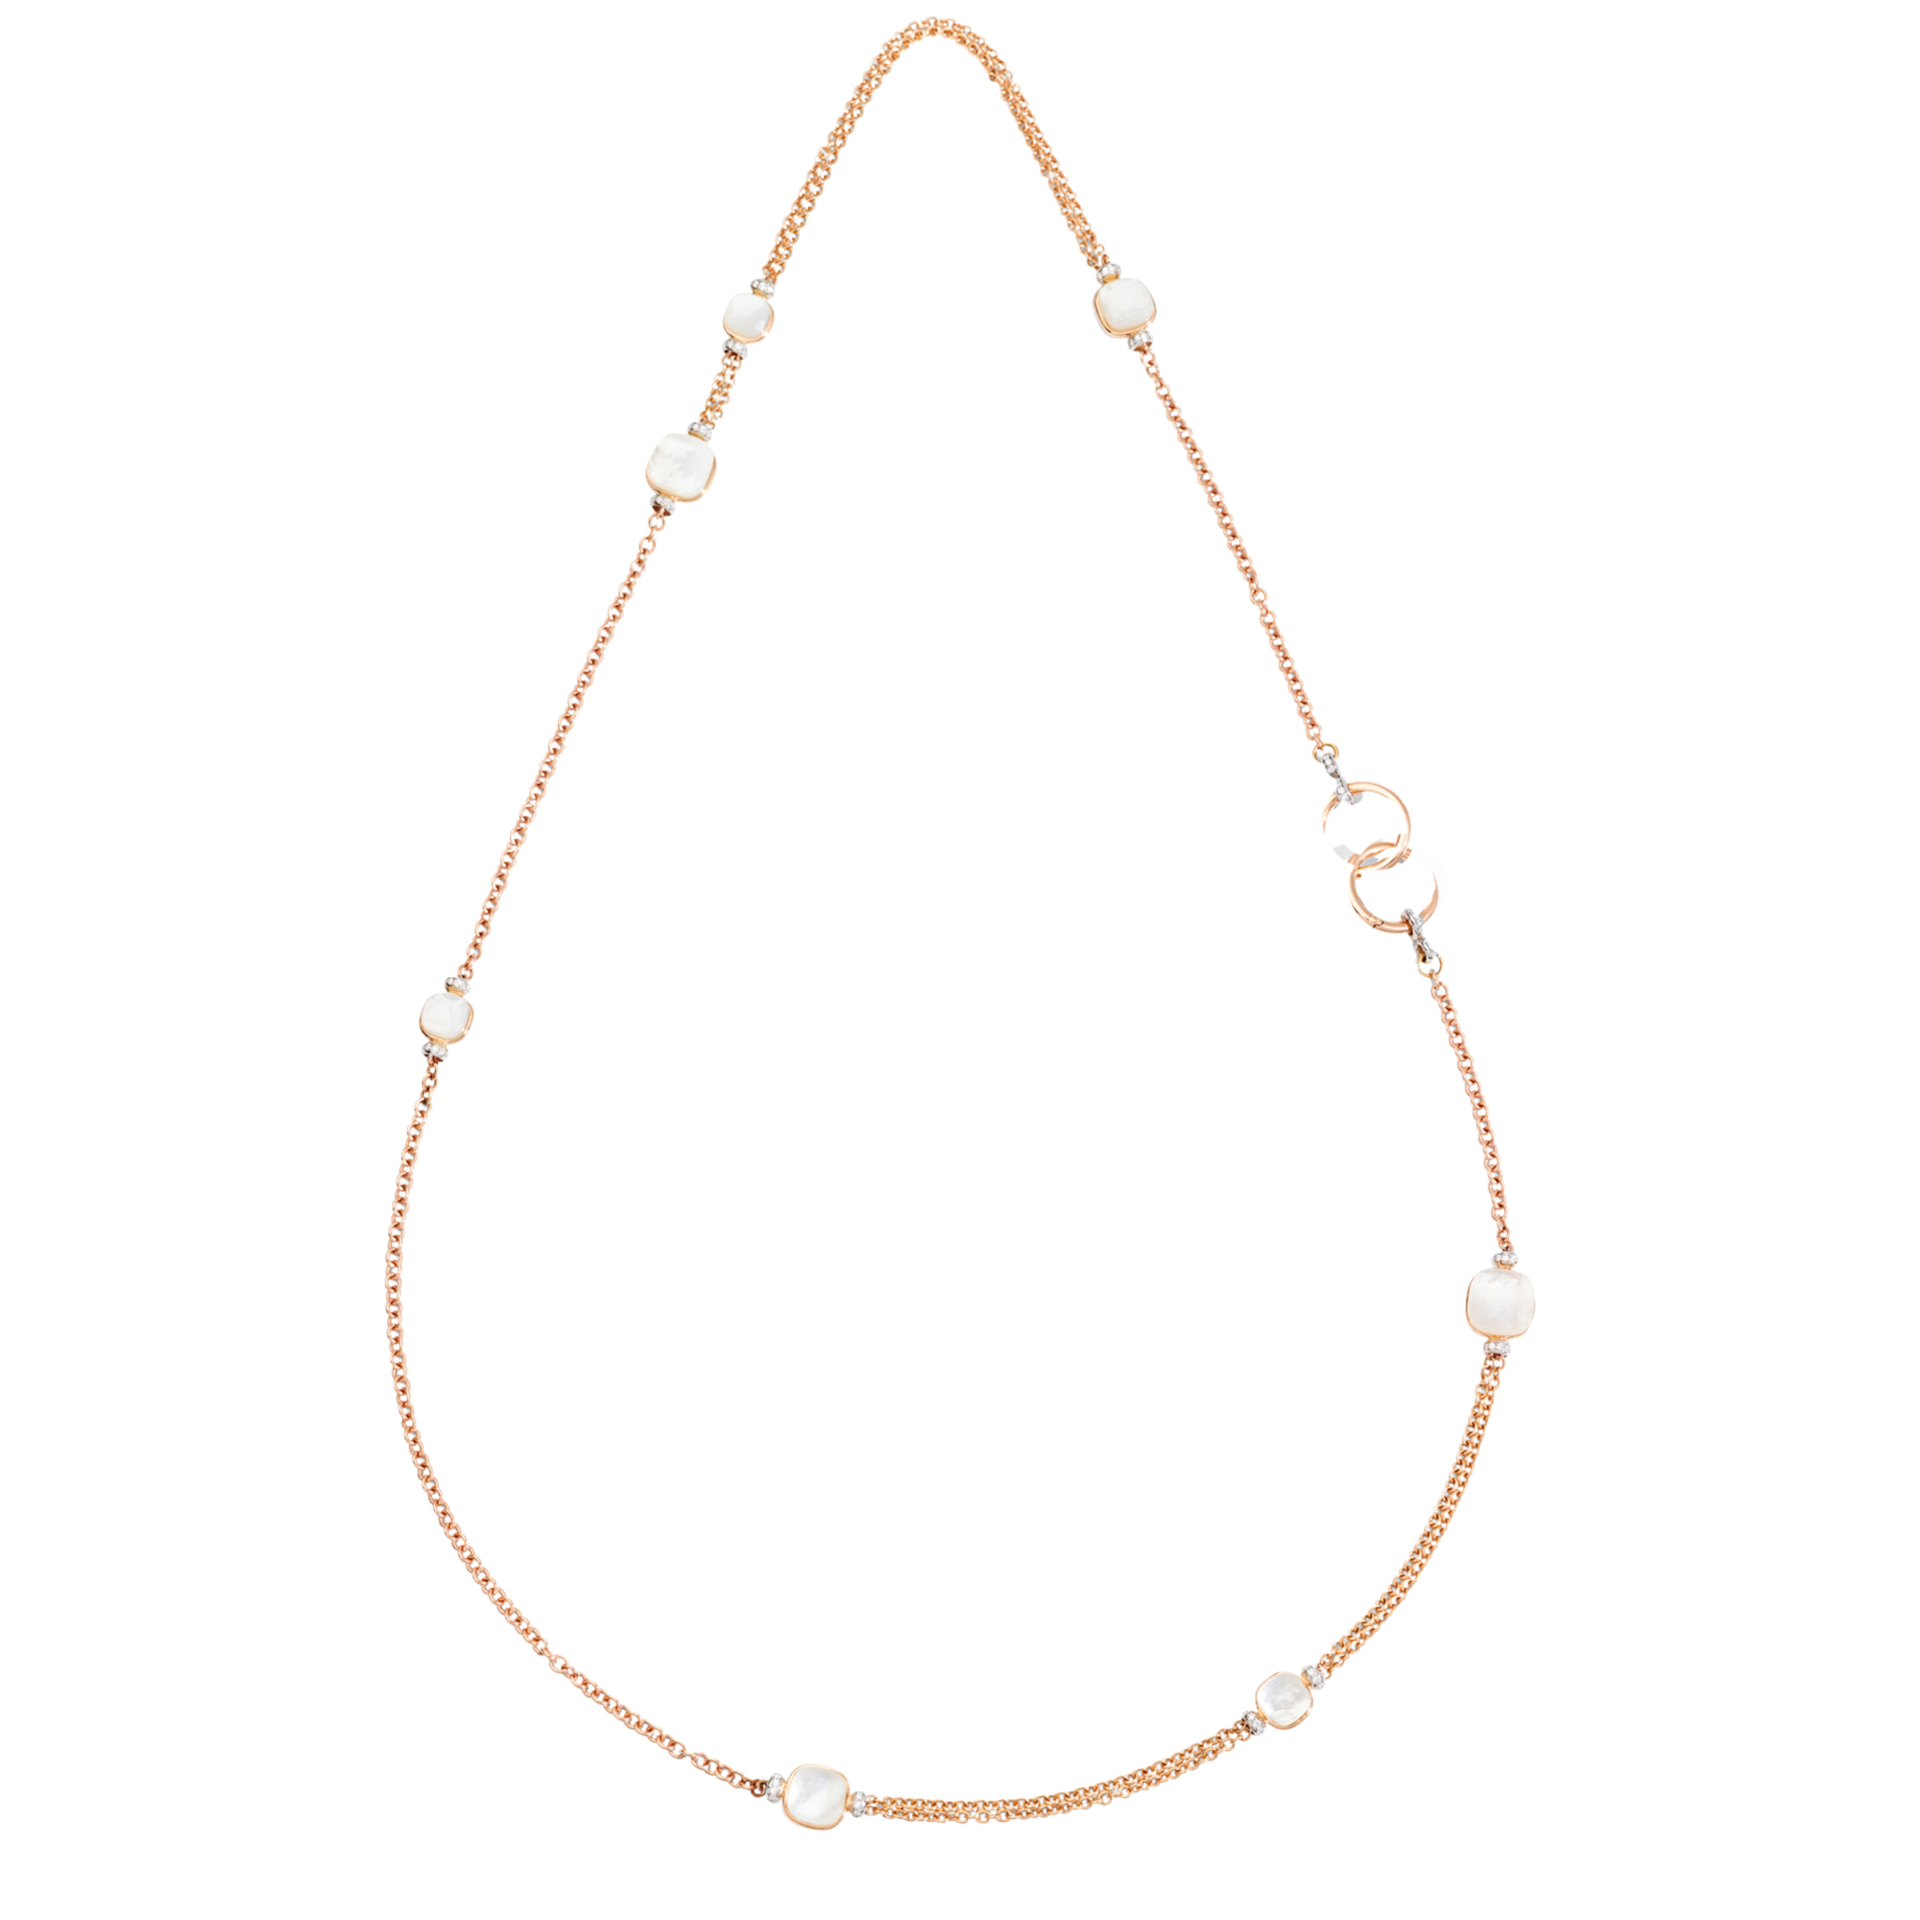 Pomellato Nudo mother-of-pearl necklace